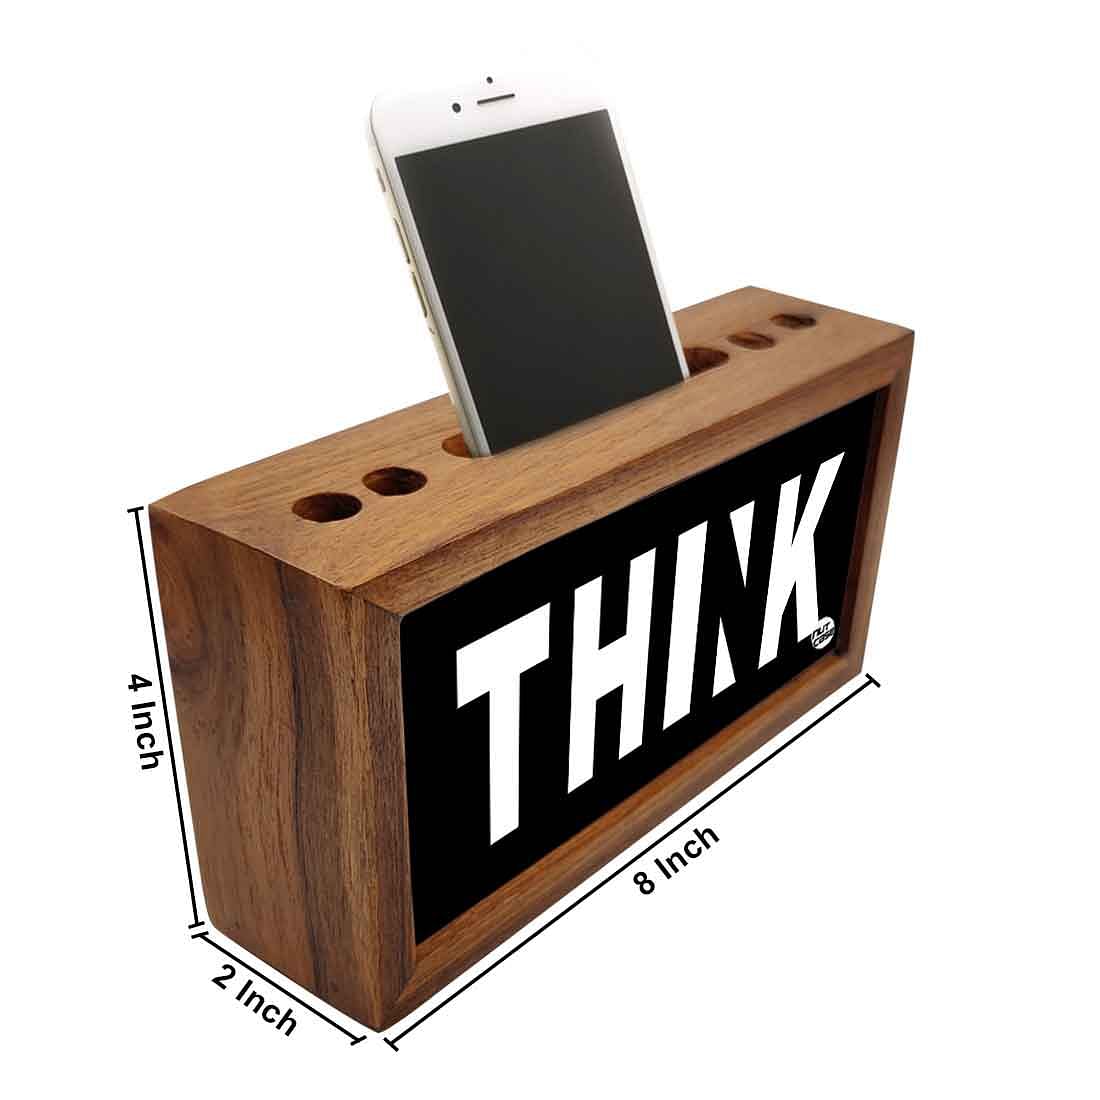 Wooden desk organizer Pen Mobile Stand - Think Nutcase